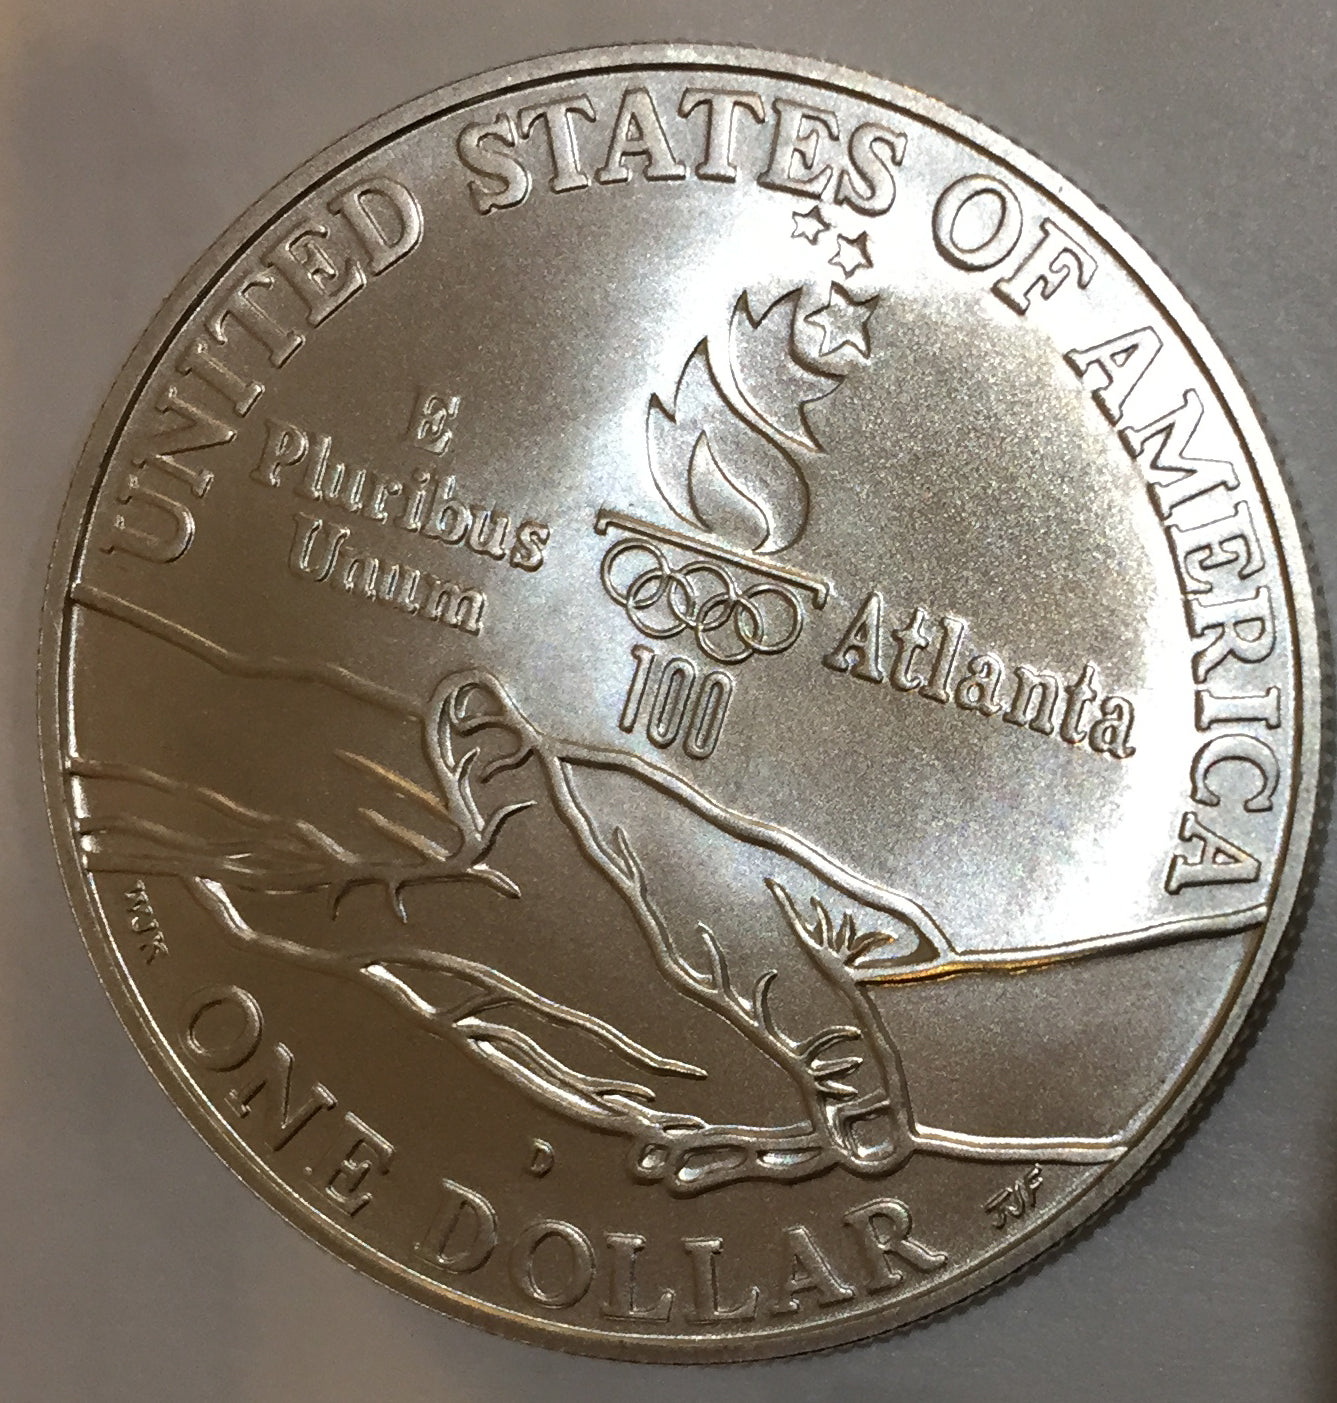 Atlantic Olympic Runners Commemorative Silver Dollar 1995 D GEM UNCIRC uncirculated Denver - reverse